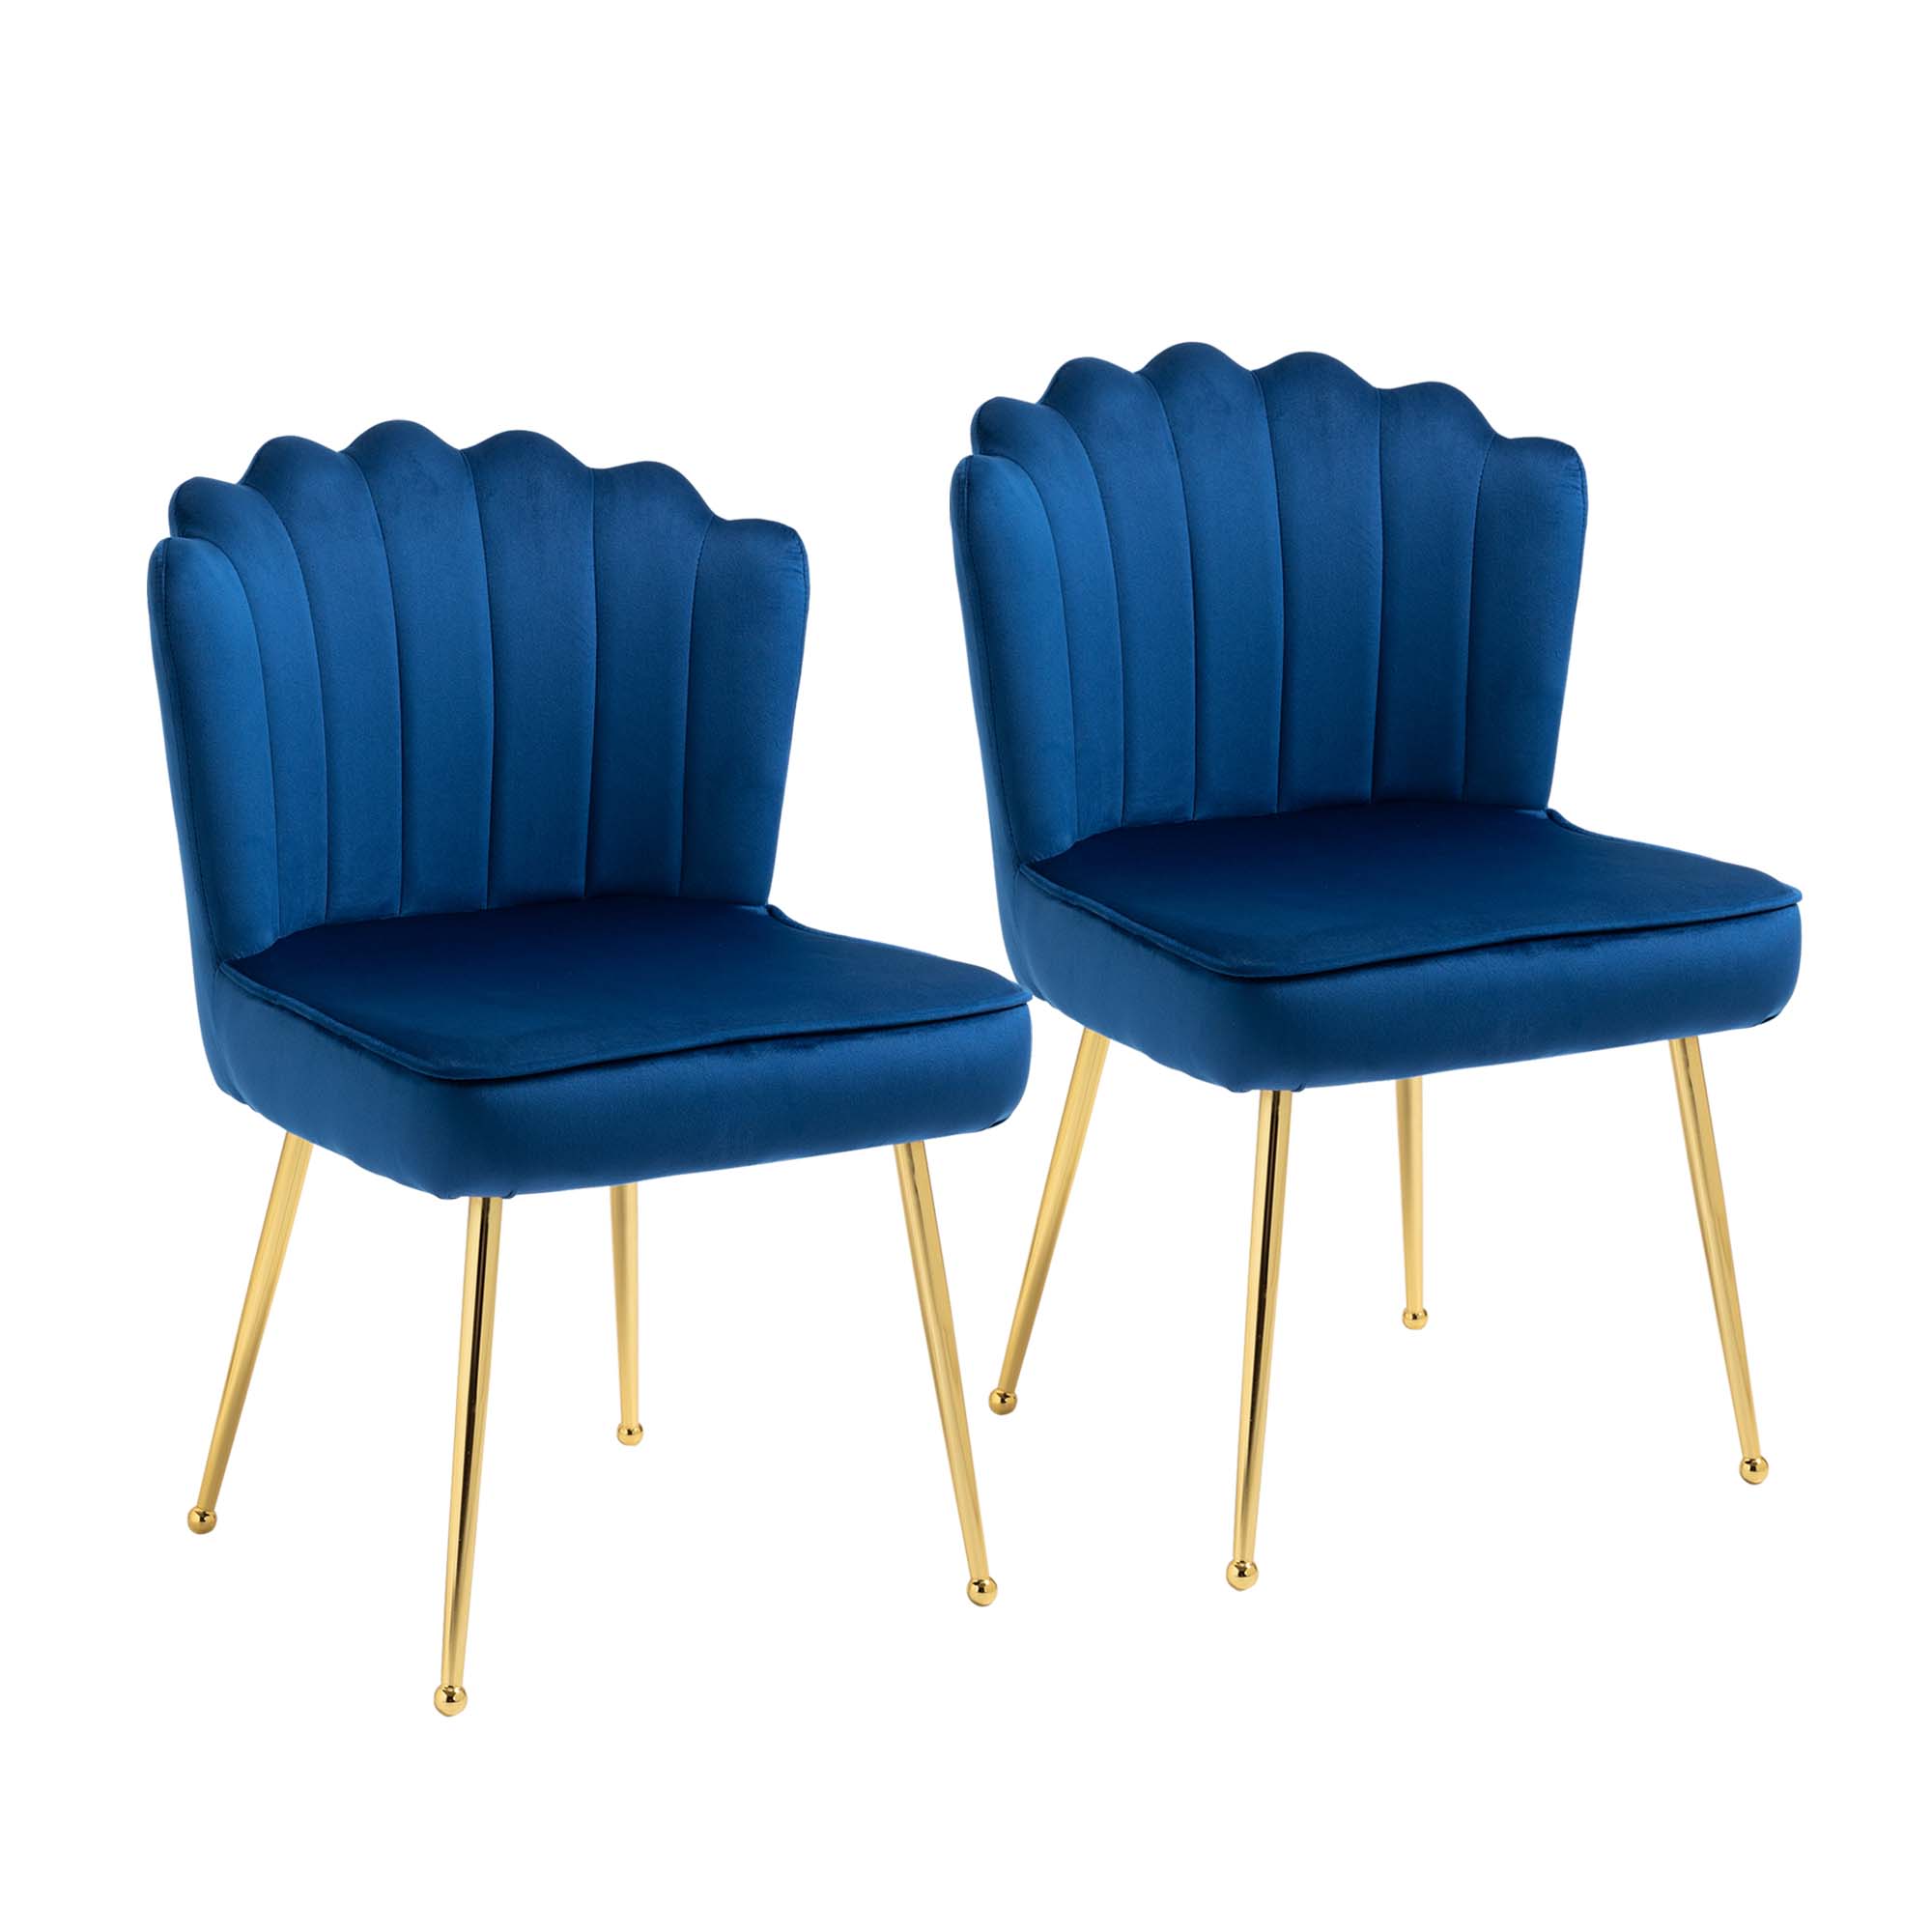 HOMCOM Σετ 2 Μοντέρνες Επενδυμένες Καρέκλες για Σαλόνι ή Σαλόνι με Ταπετσαρία με Velvet Effect